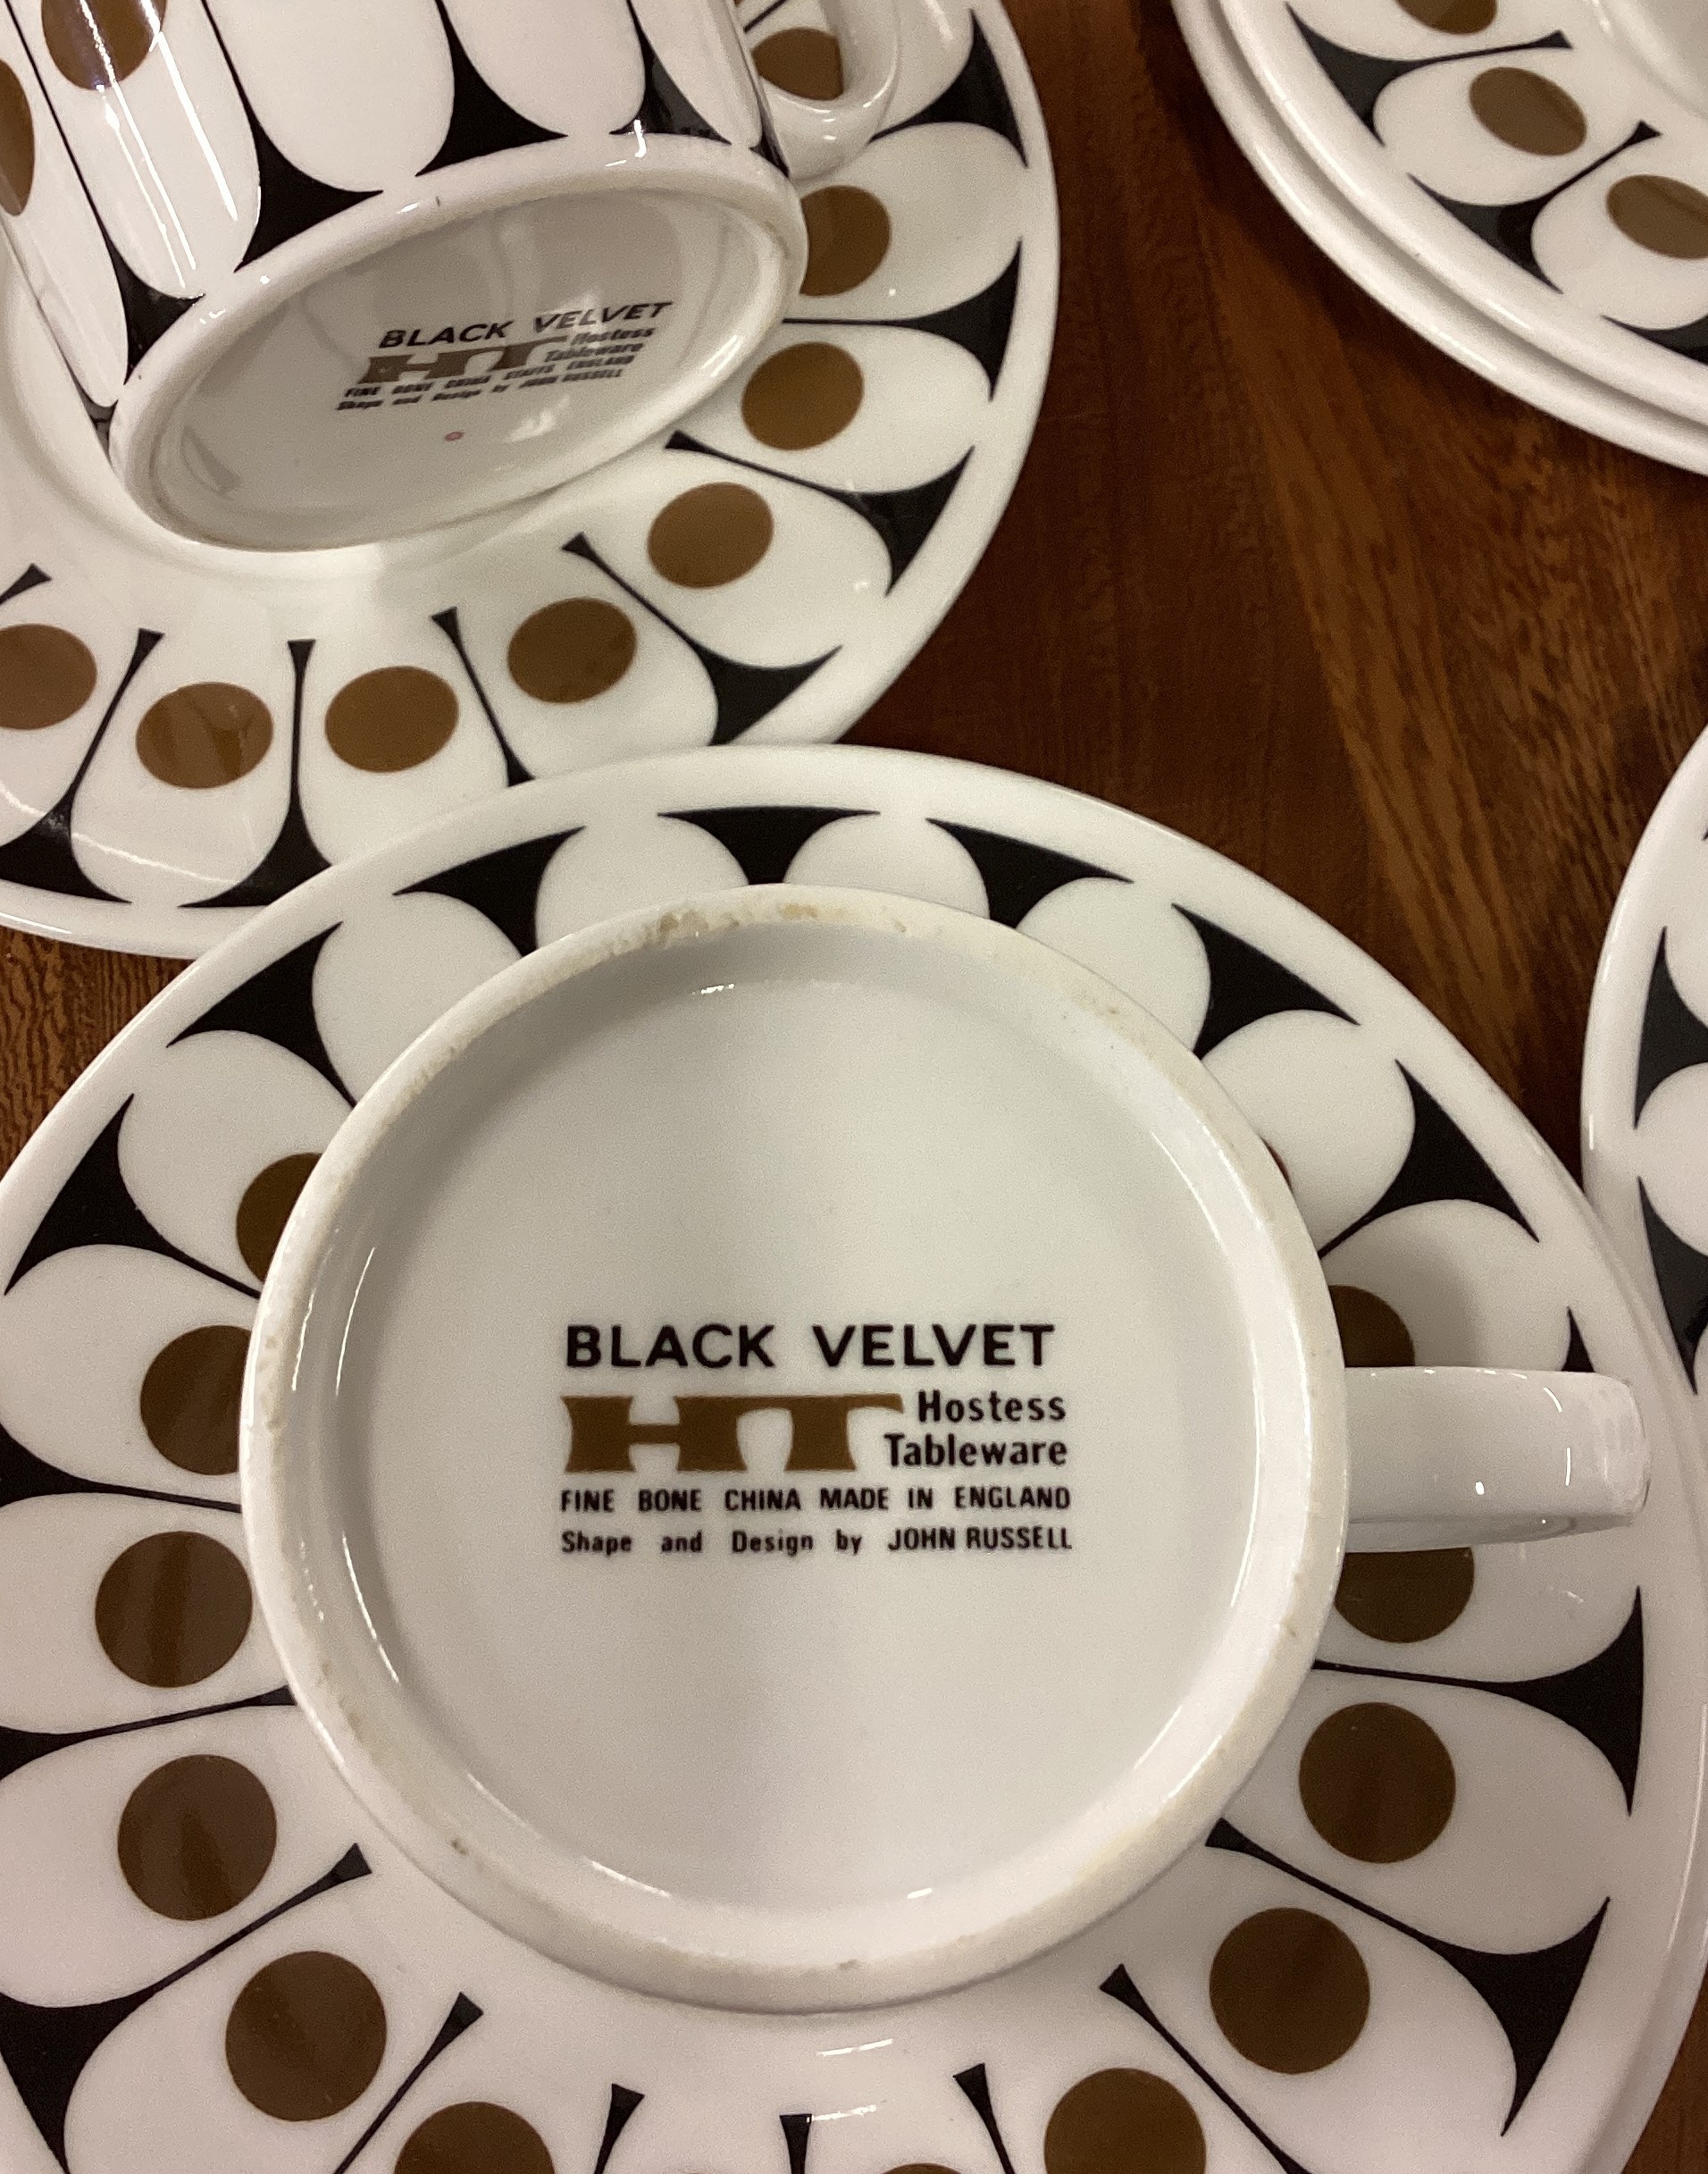 A Black Velvet decorative coffee service. - Image 2 of 2